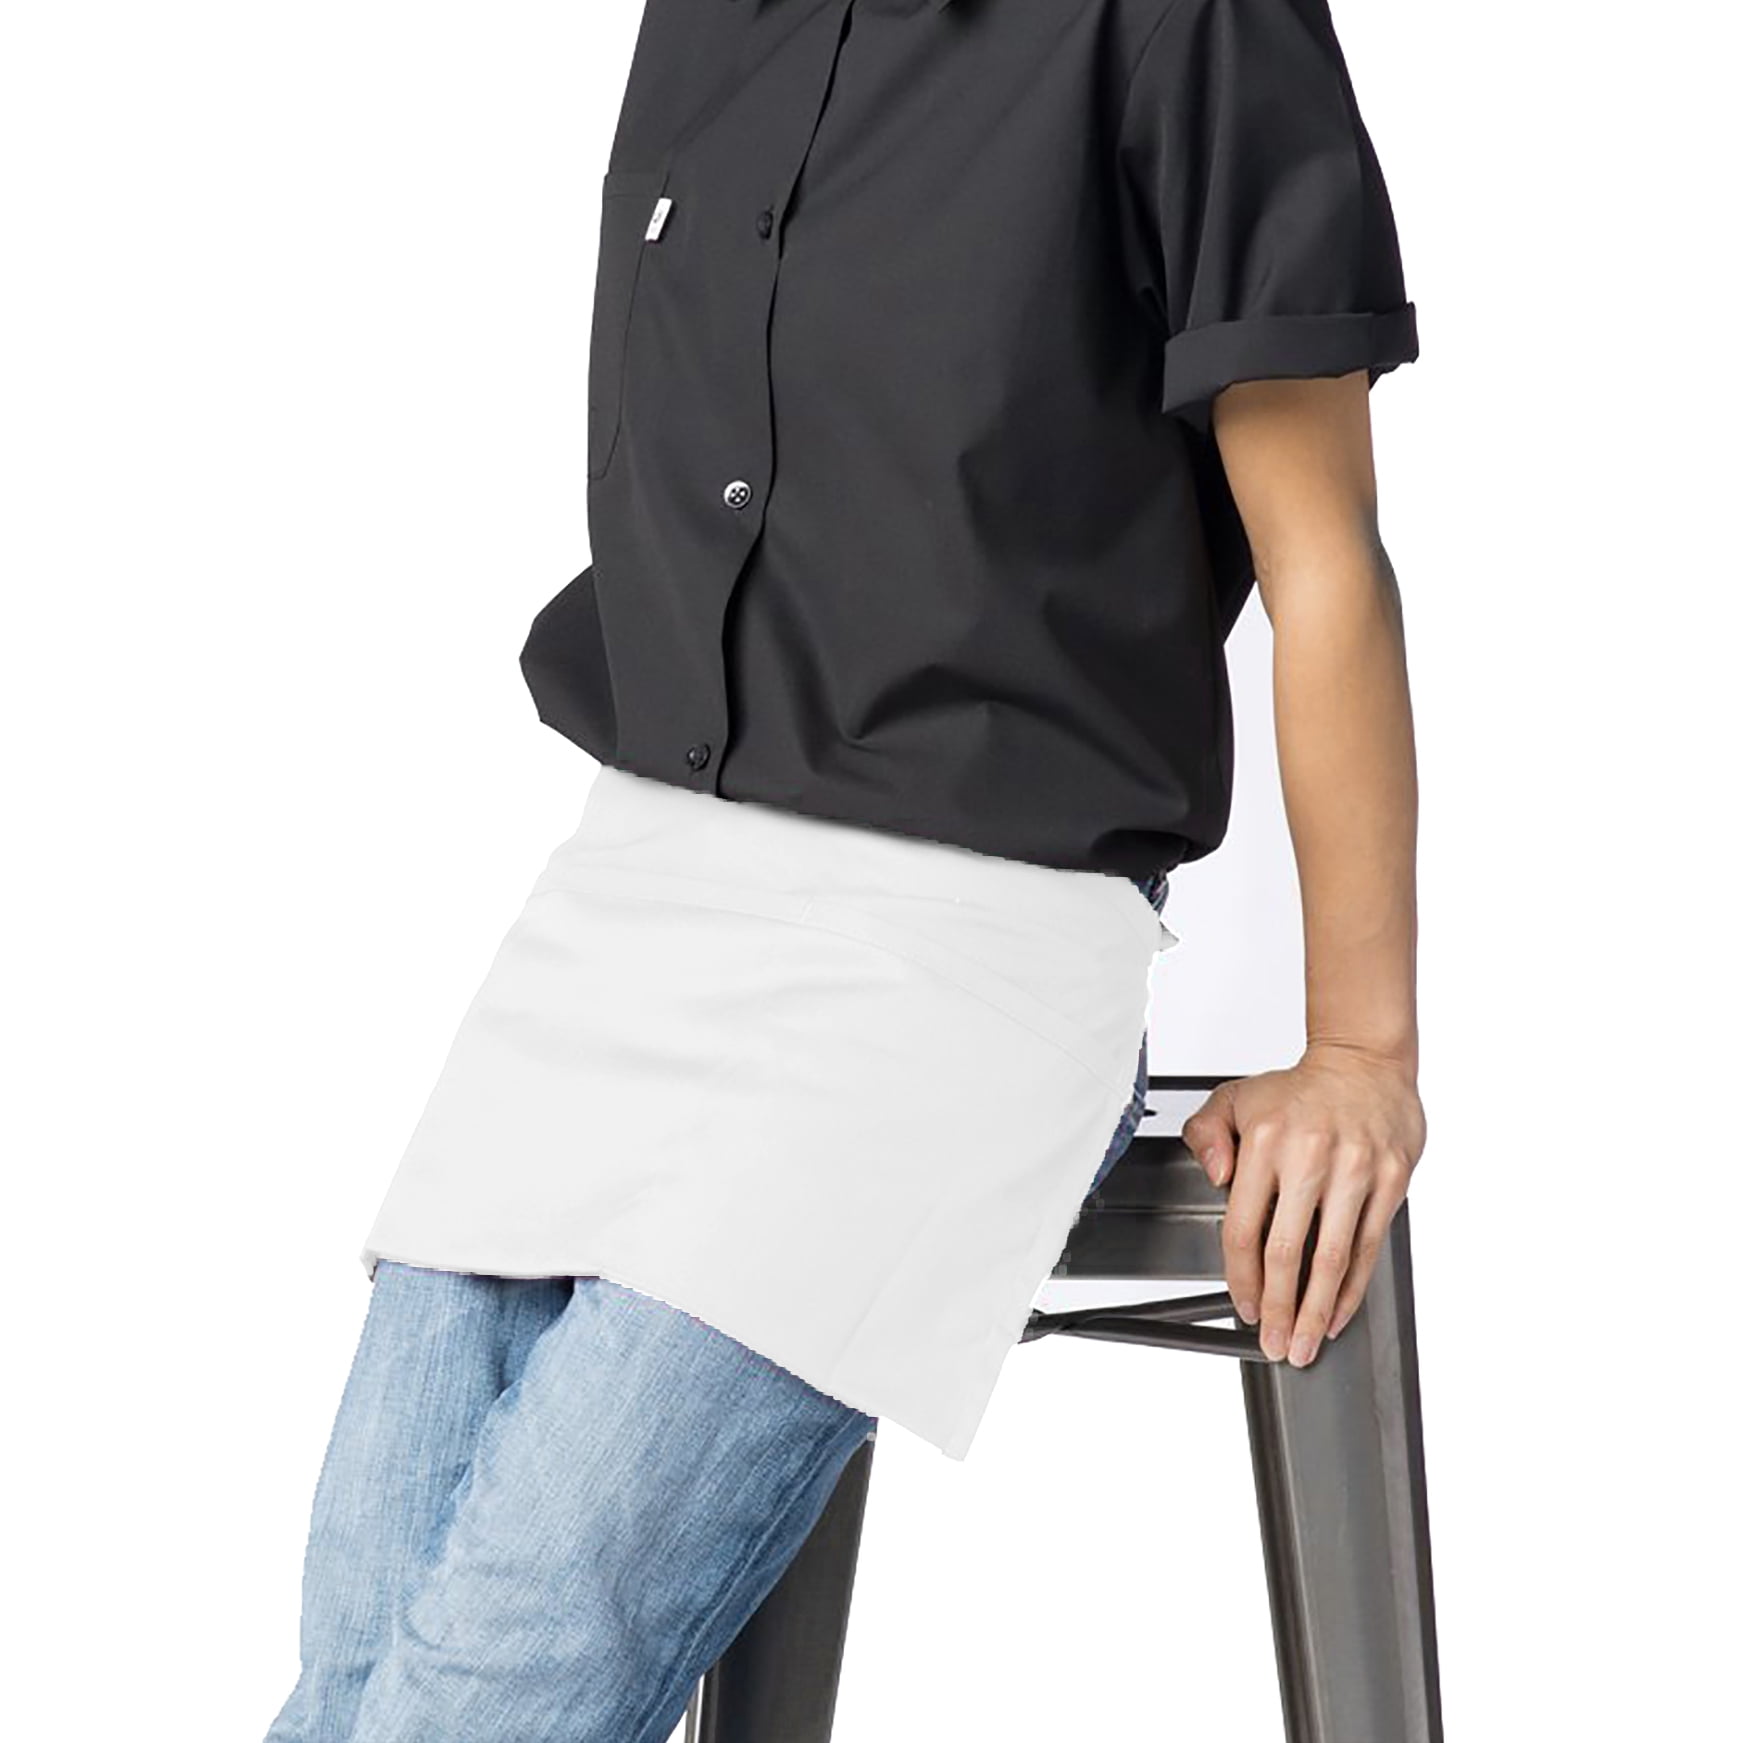 1 new black server apron 3 pocket half bistro waist waiter waitress restaurant 